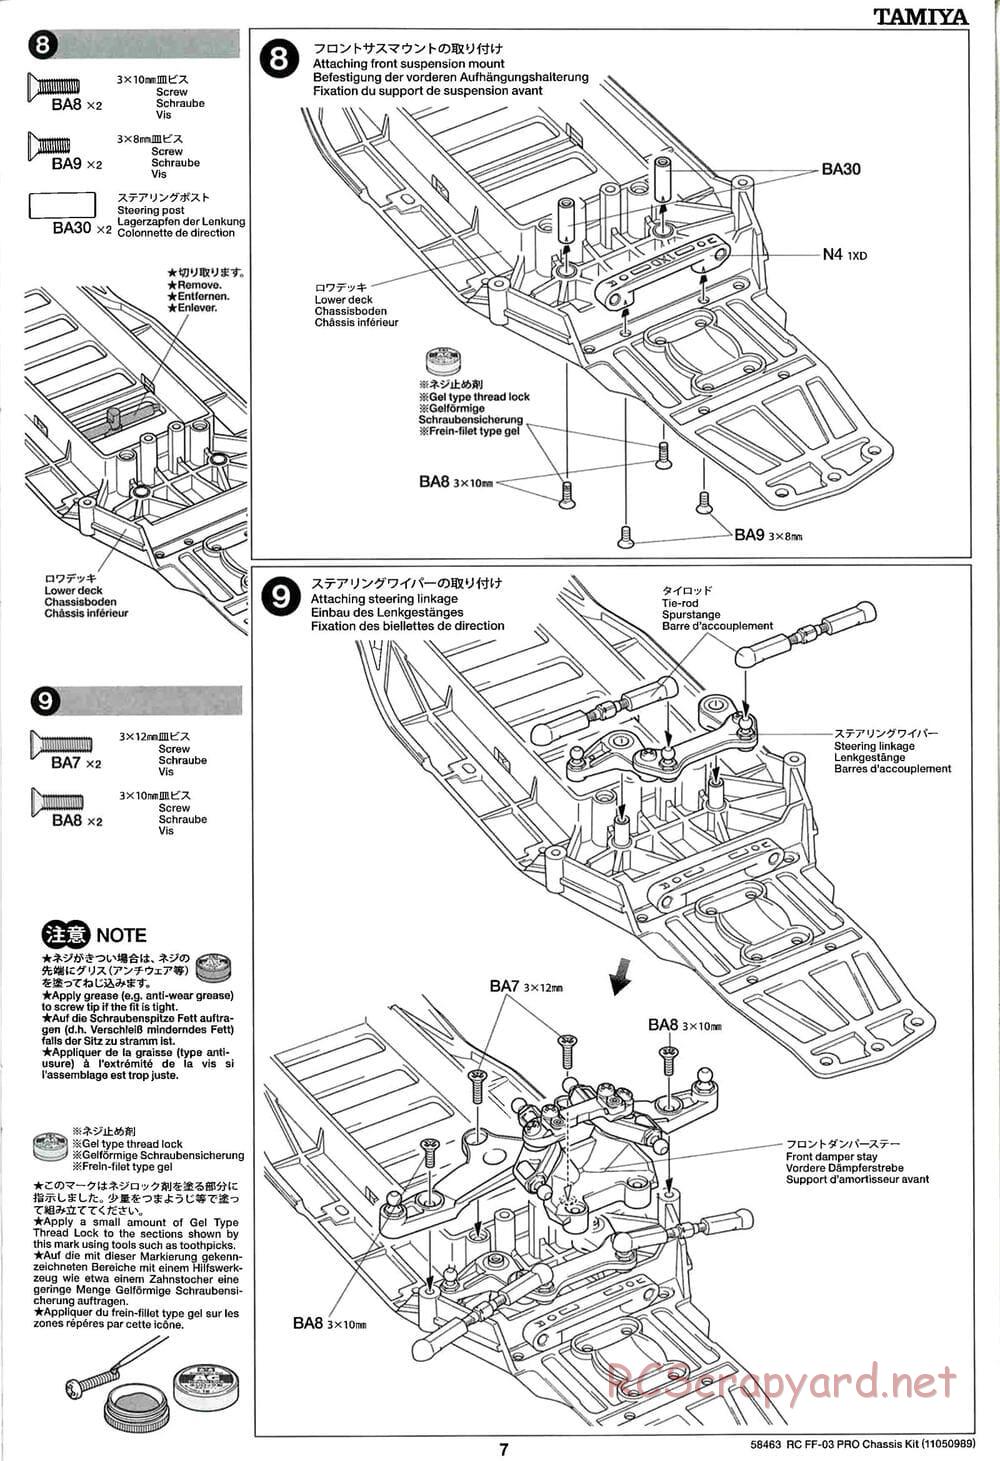 Tamiya - FF-03 Pro Chassis - Manual - Page 7